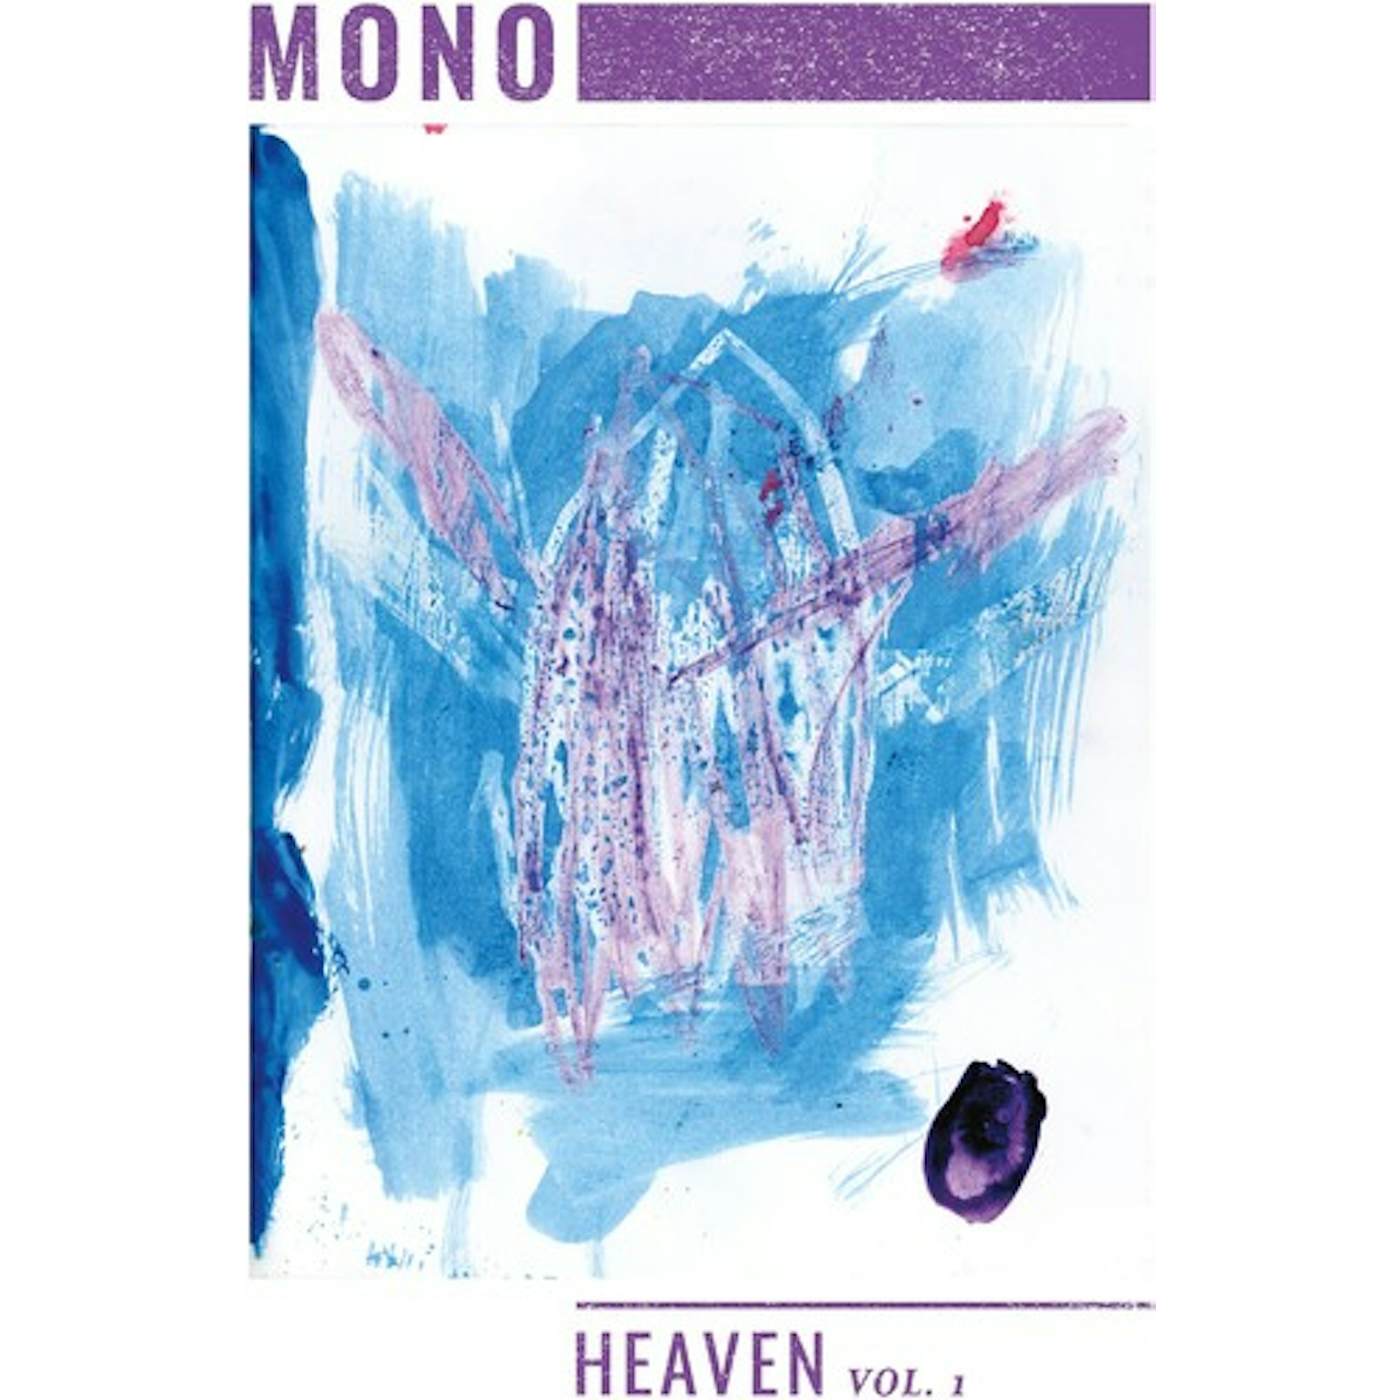 MONO HEAVEN VOL. 1 - ICE BLUE Vinyl Record